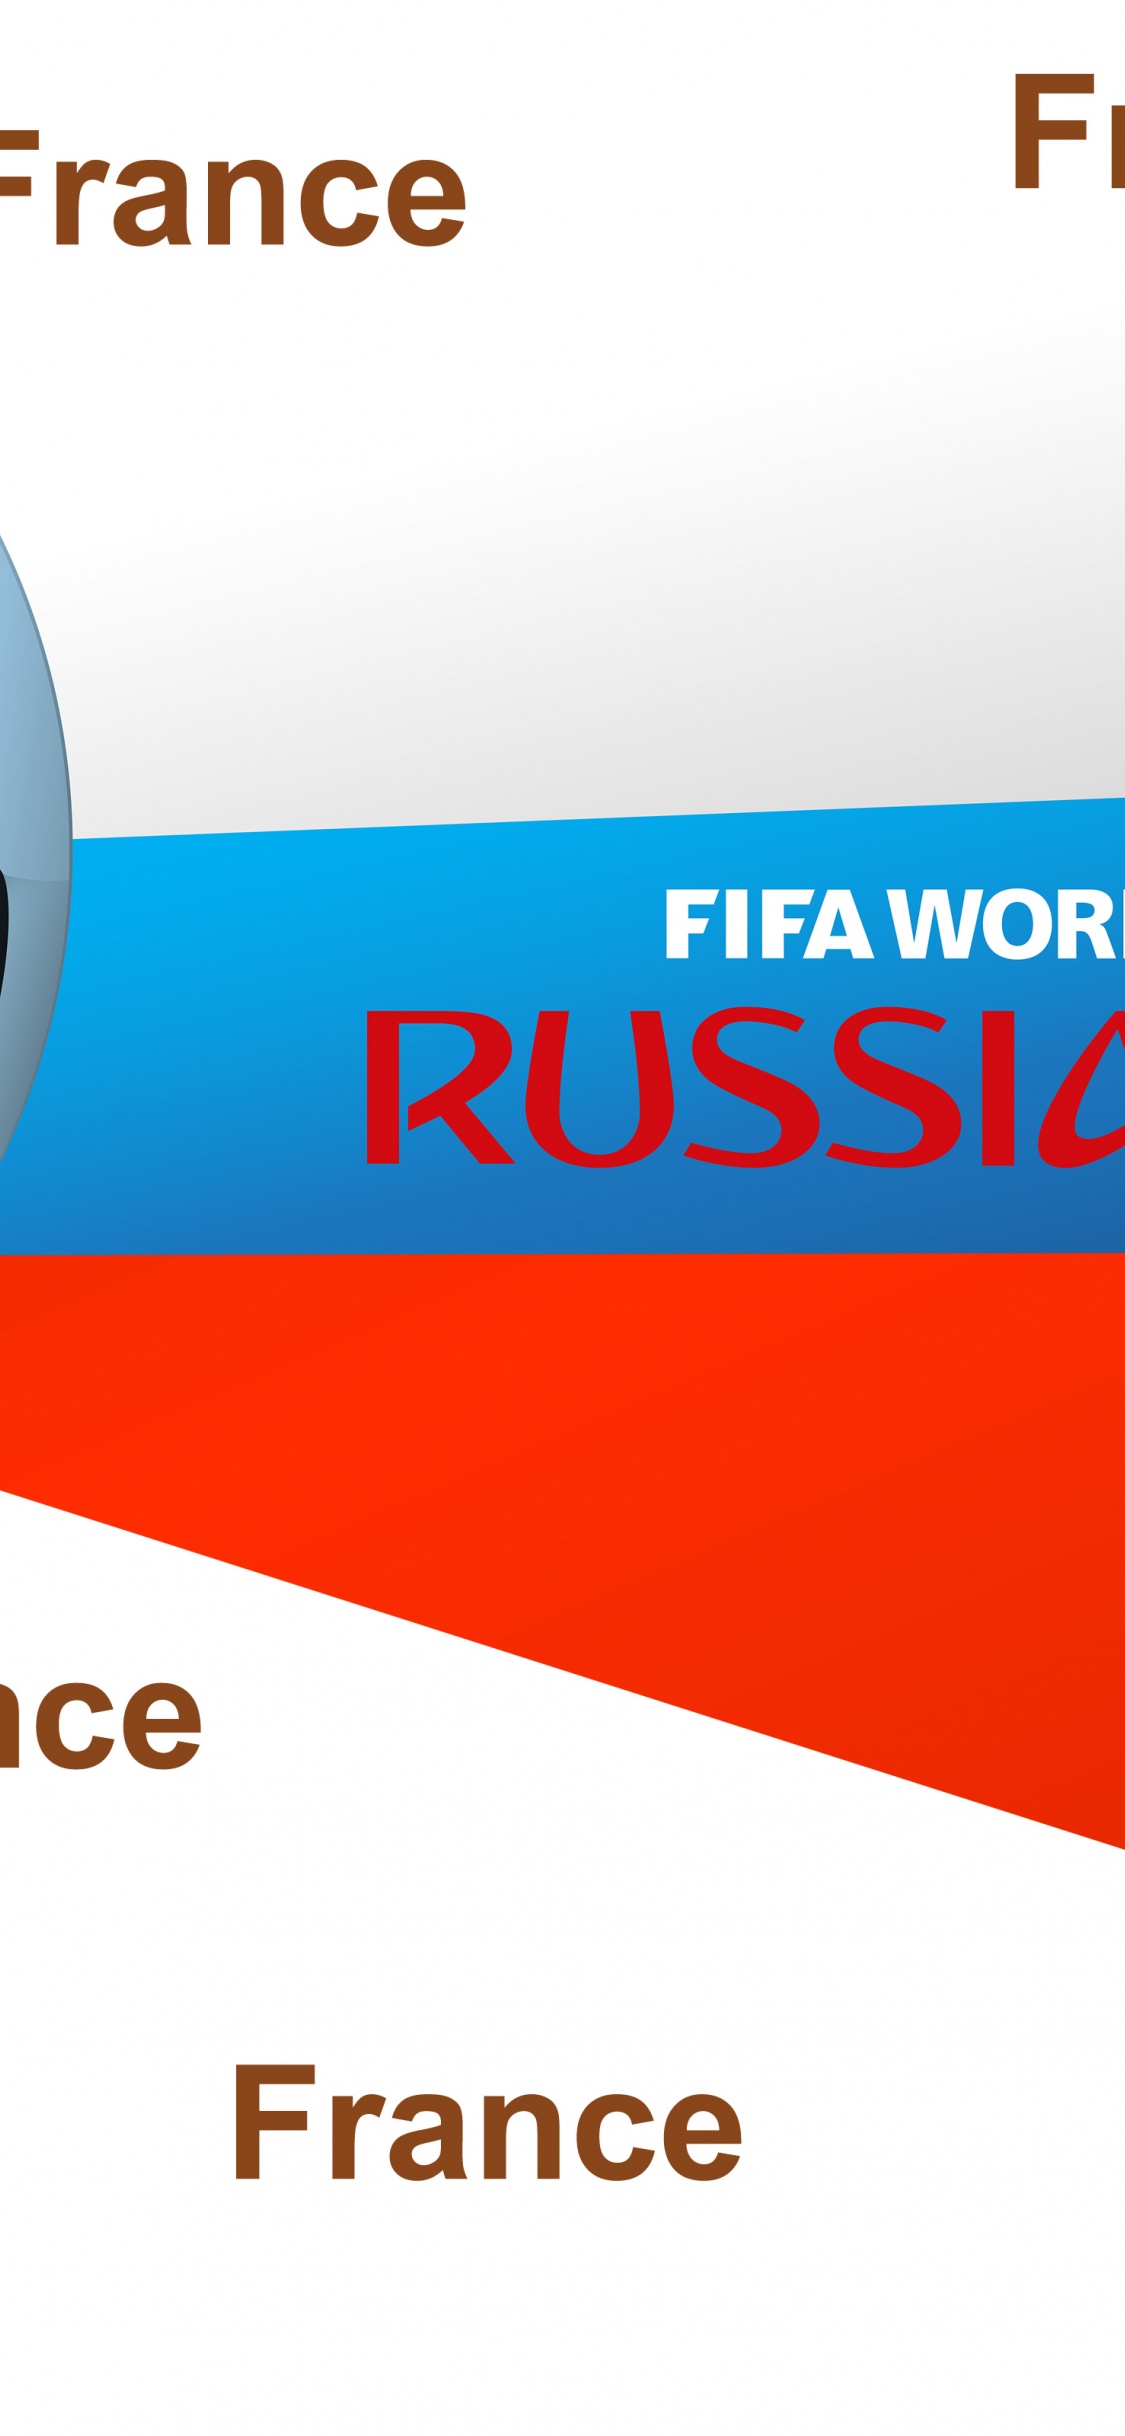 Russia WC 2018 Winner France